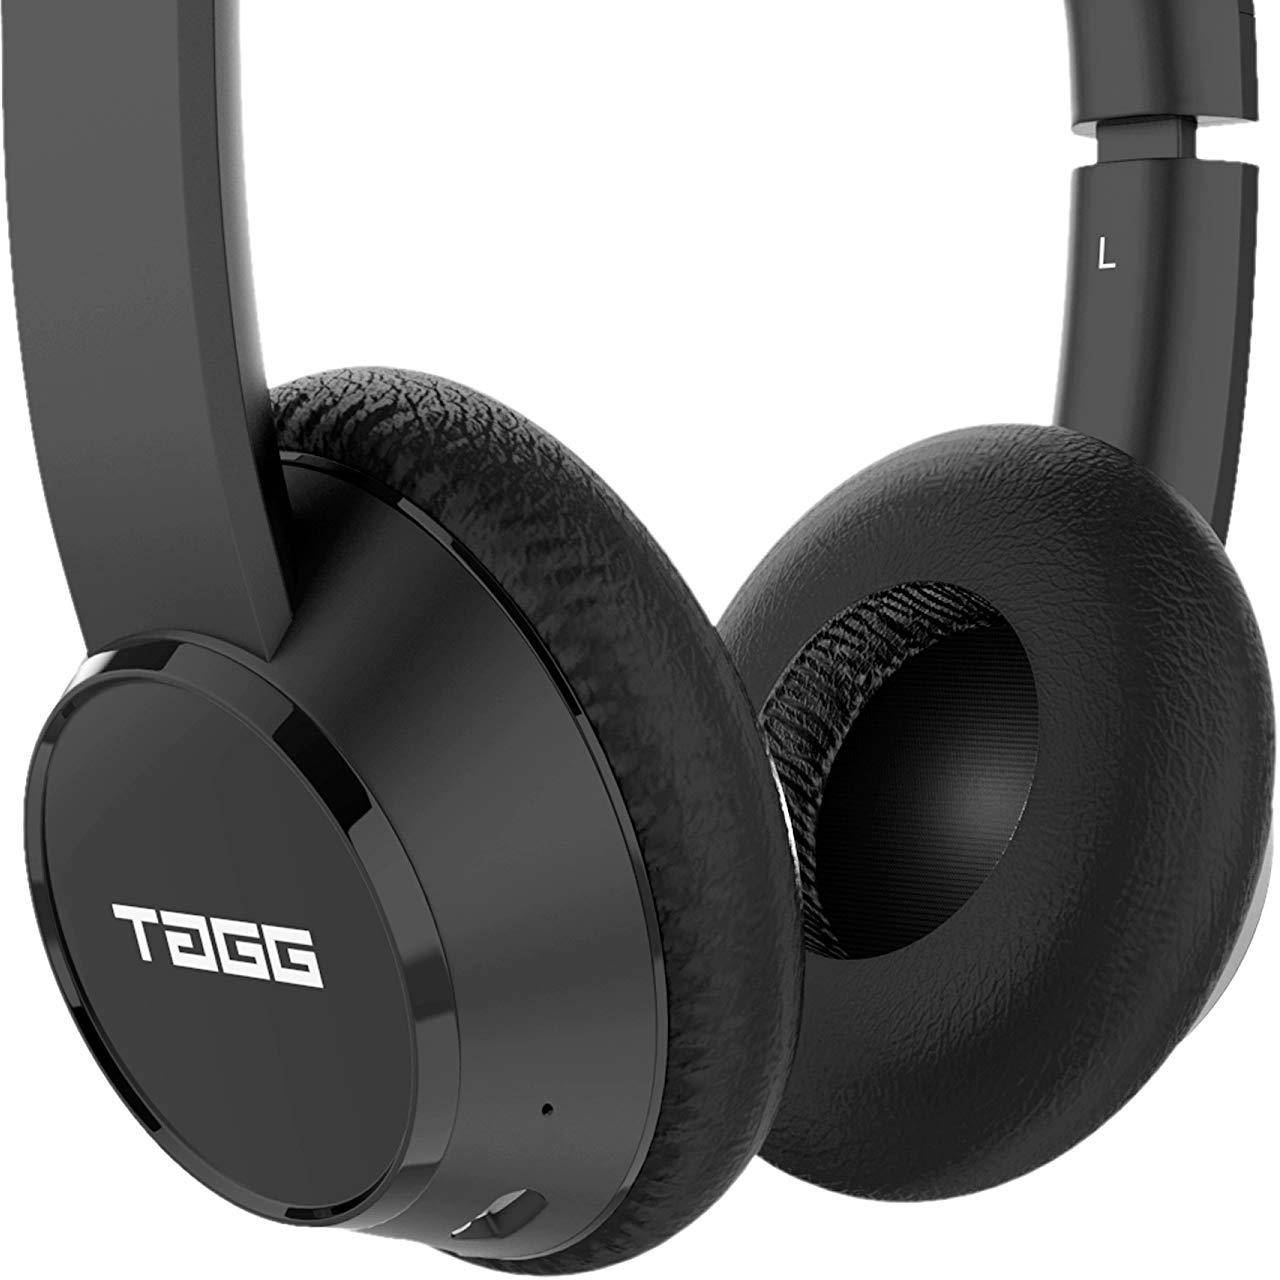 Tagg PowerBass 400 Wireless Bluetooth On-Ear Headphones zoom image